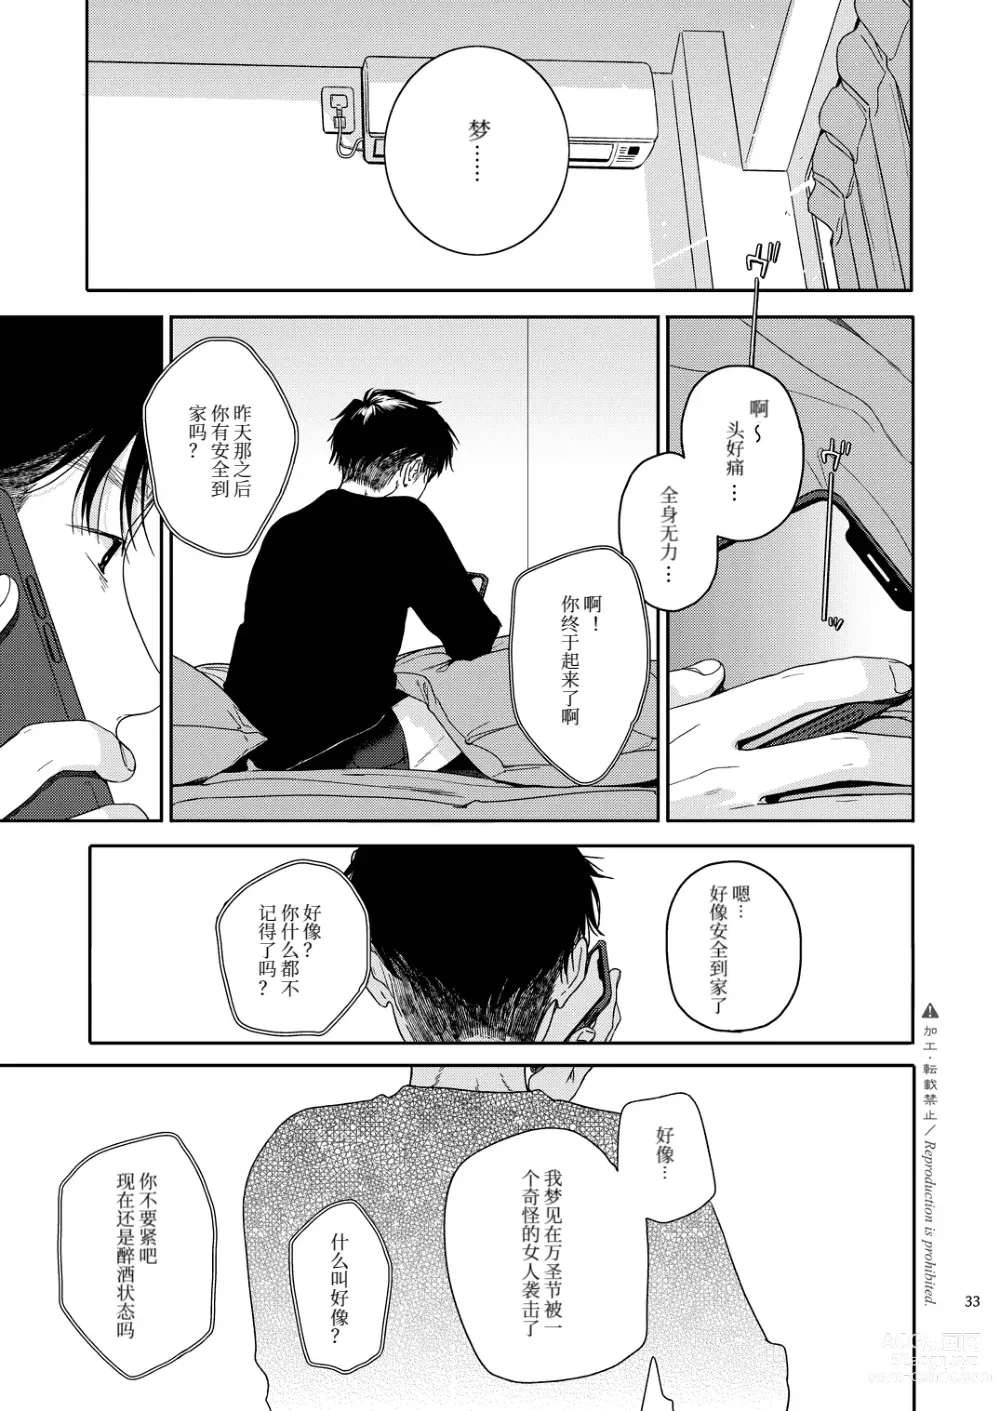 Page 35 of doujinshi Katami to Getsumei